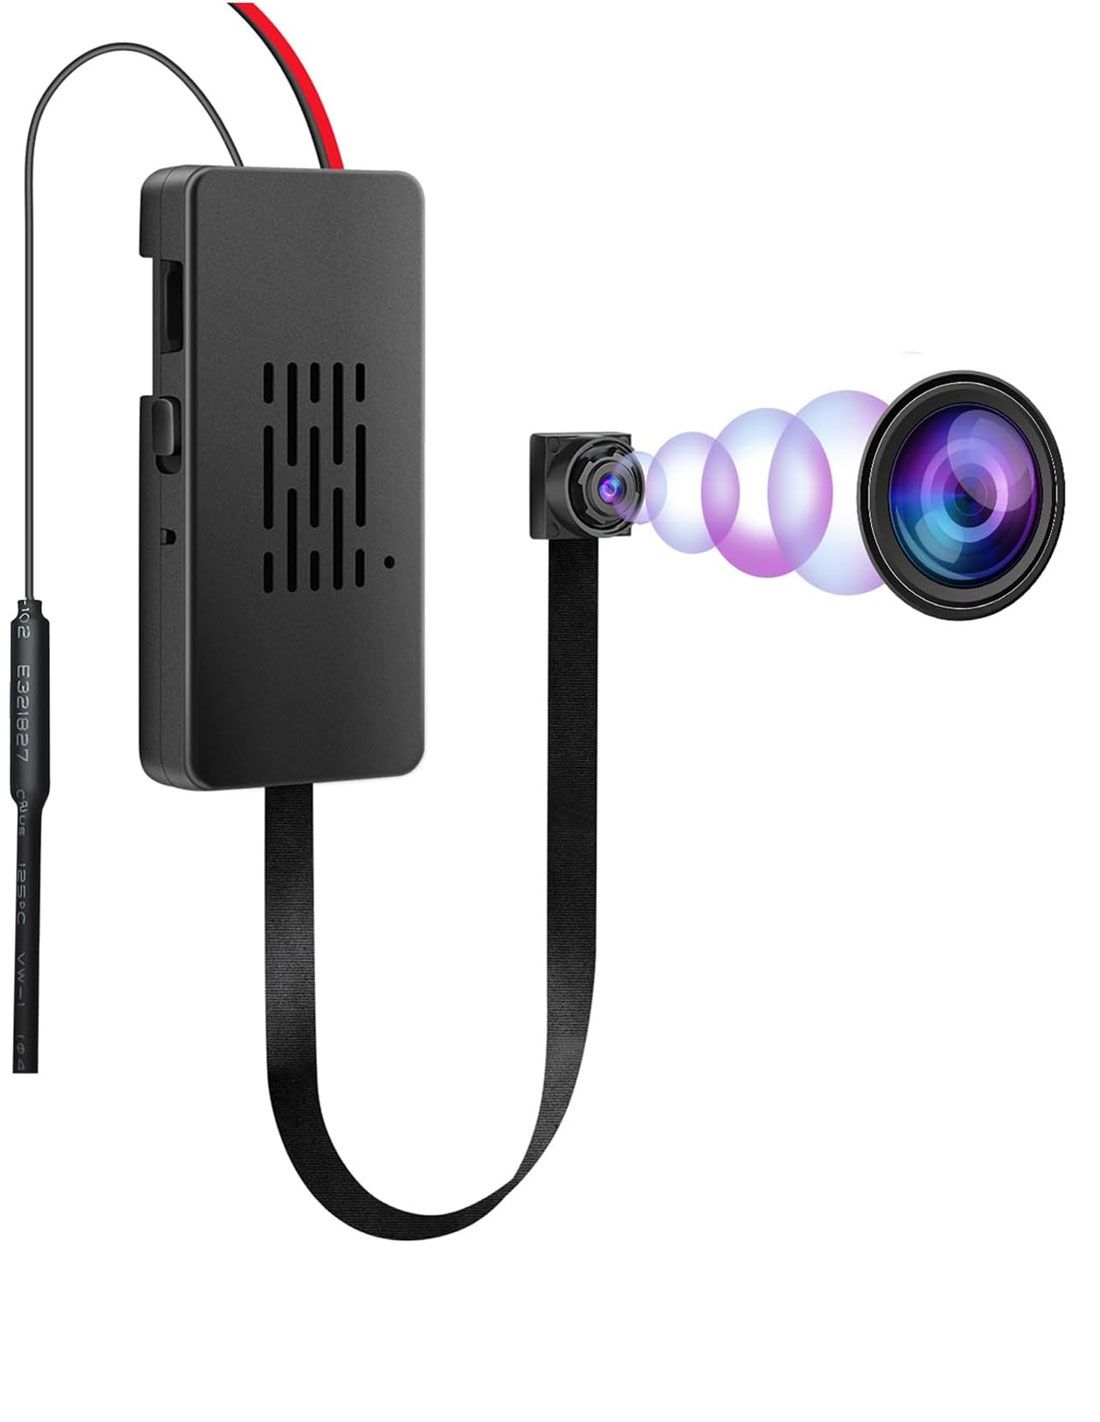 Mini Caméra Espion Wifi l Camera-Optiqua